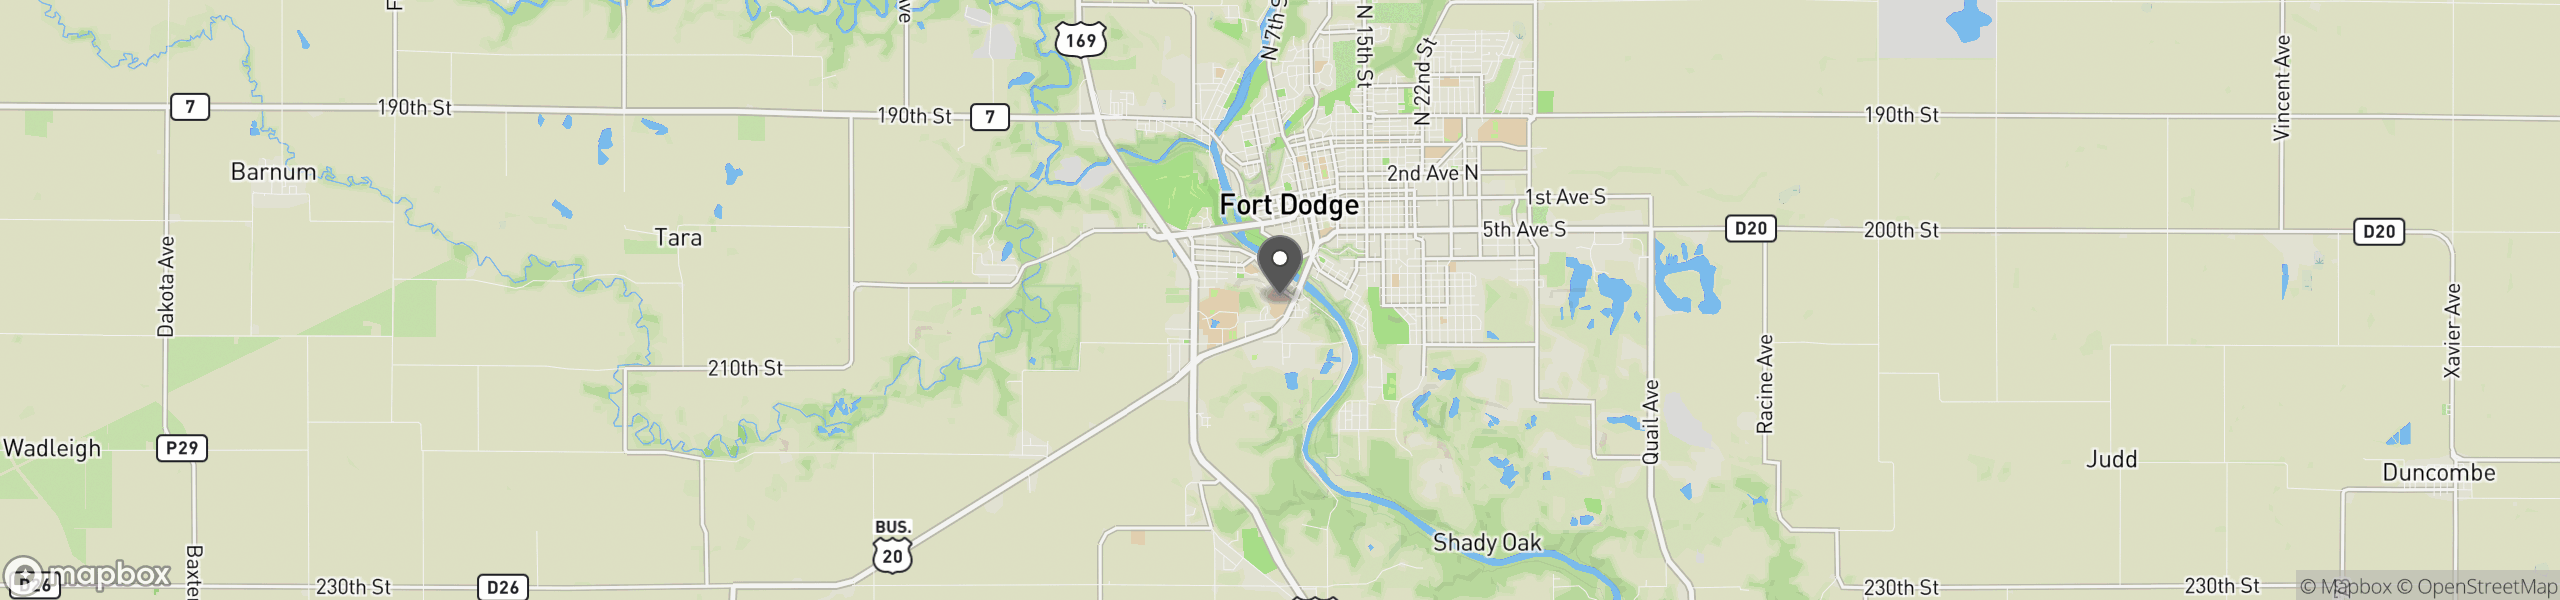 Fort Dodge, IA 50501